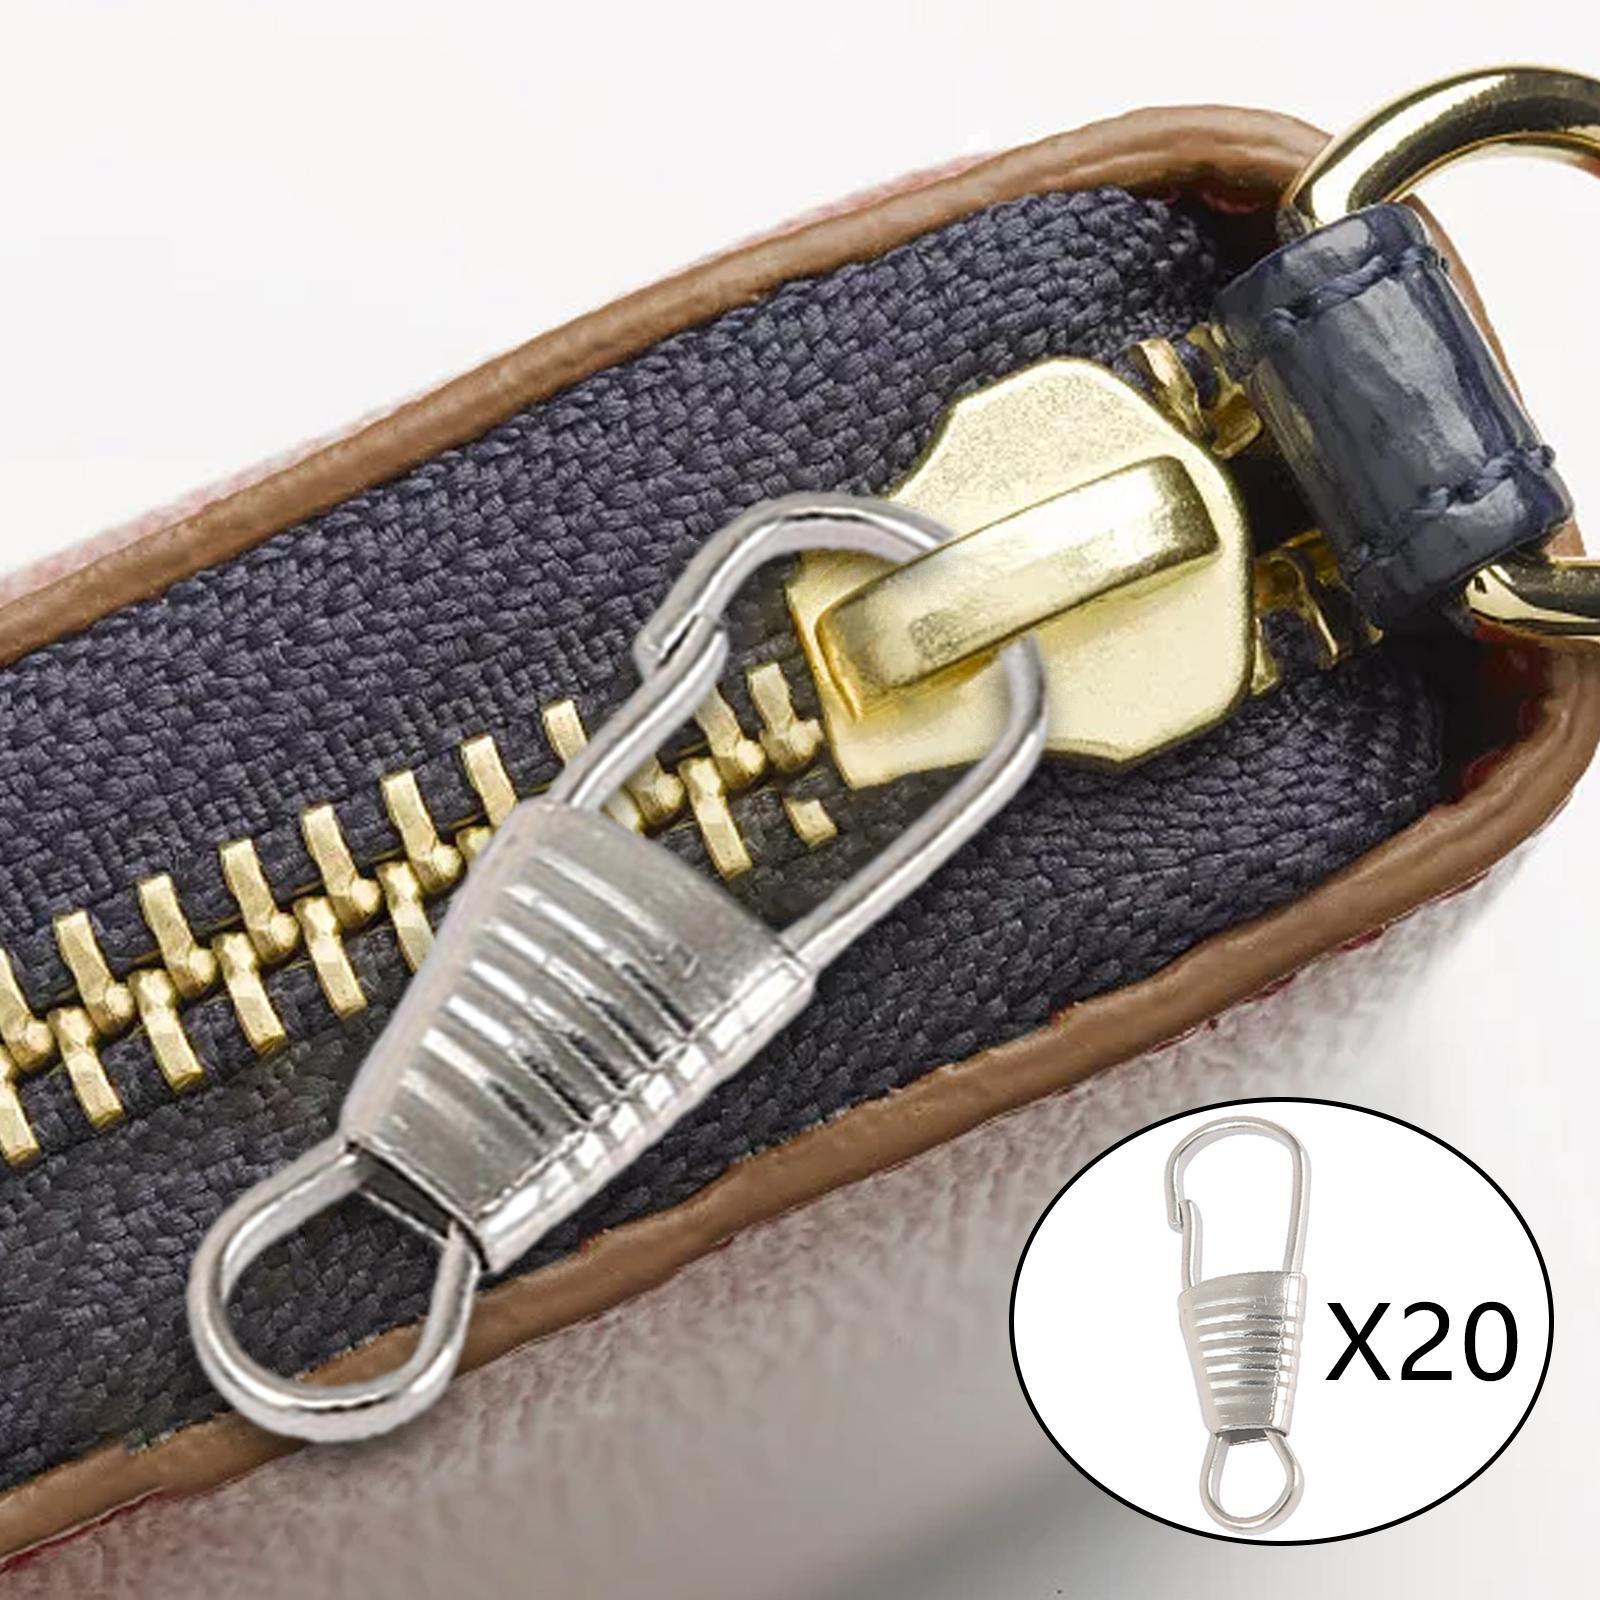 20 Pieces Zipper Pull Replacement Detachable  Zipper Puller